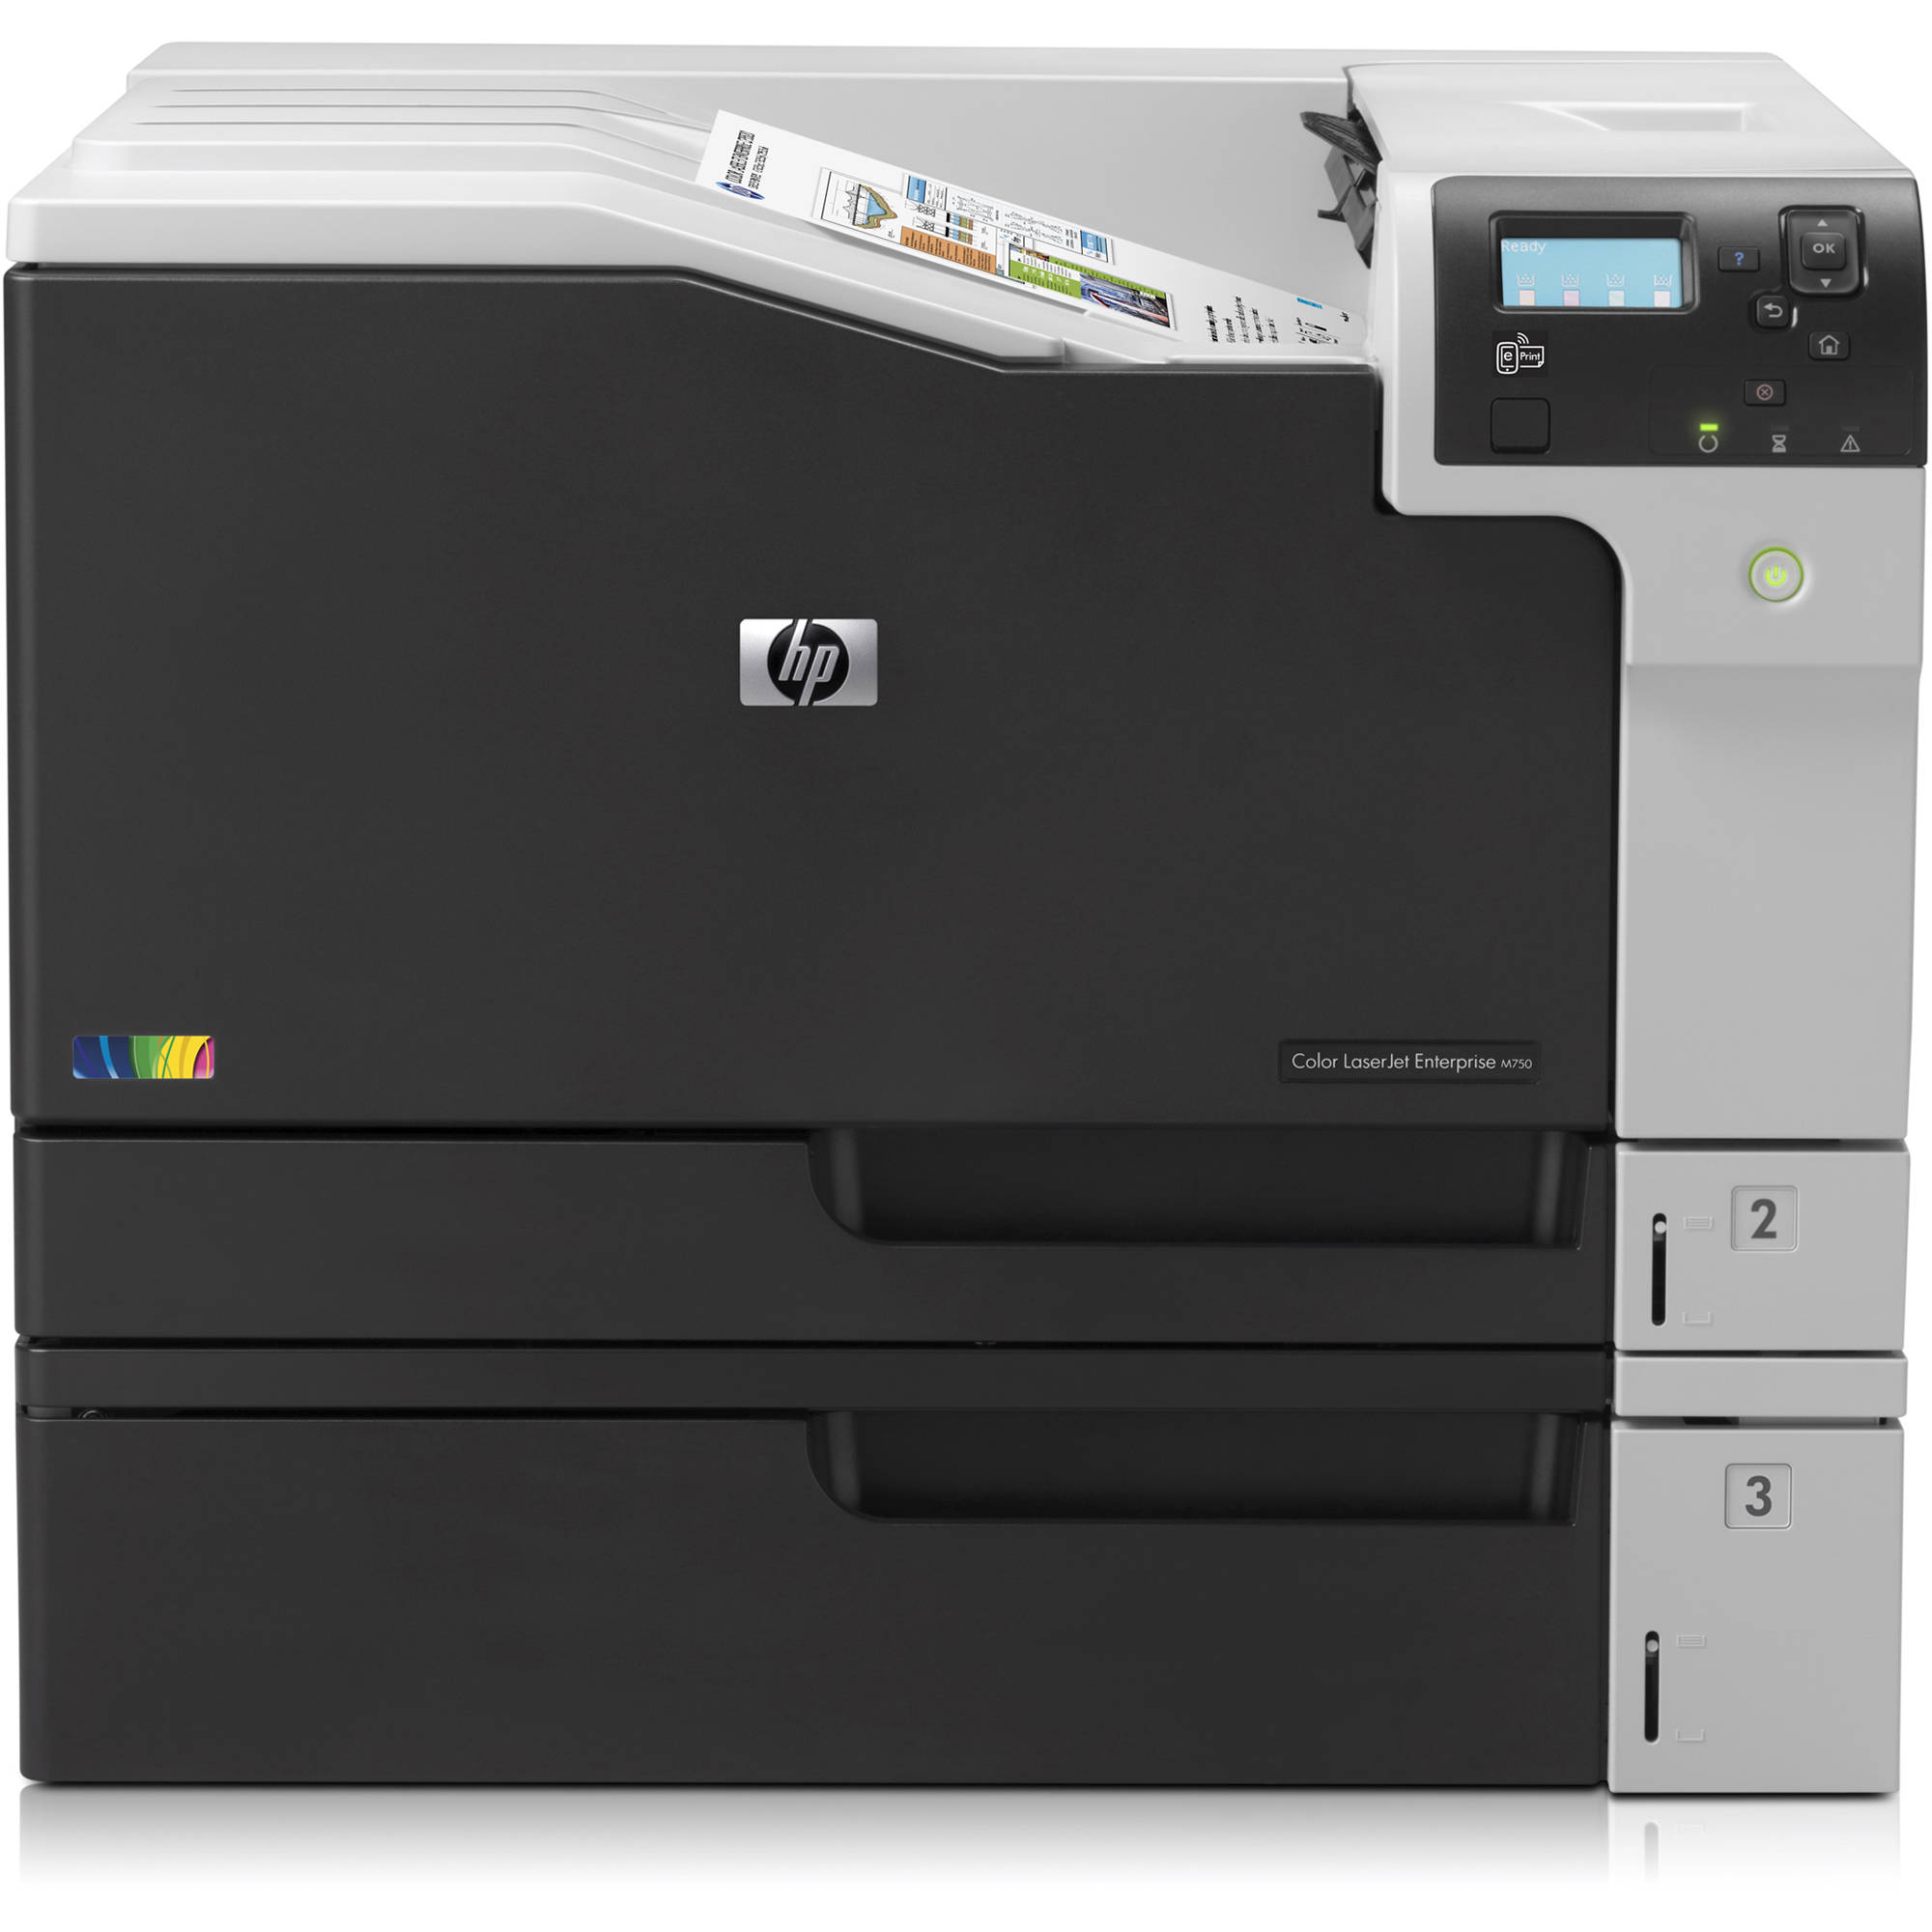 Absolute Toner $20/Month HP Color 11x17 Laserjet Enterprise M750dn (D3L09A) Laser Printer Large Format Printer